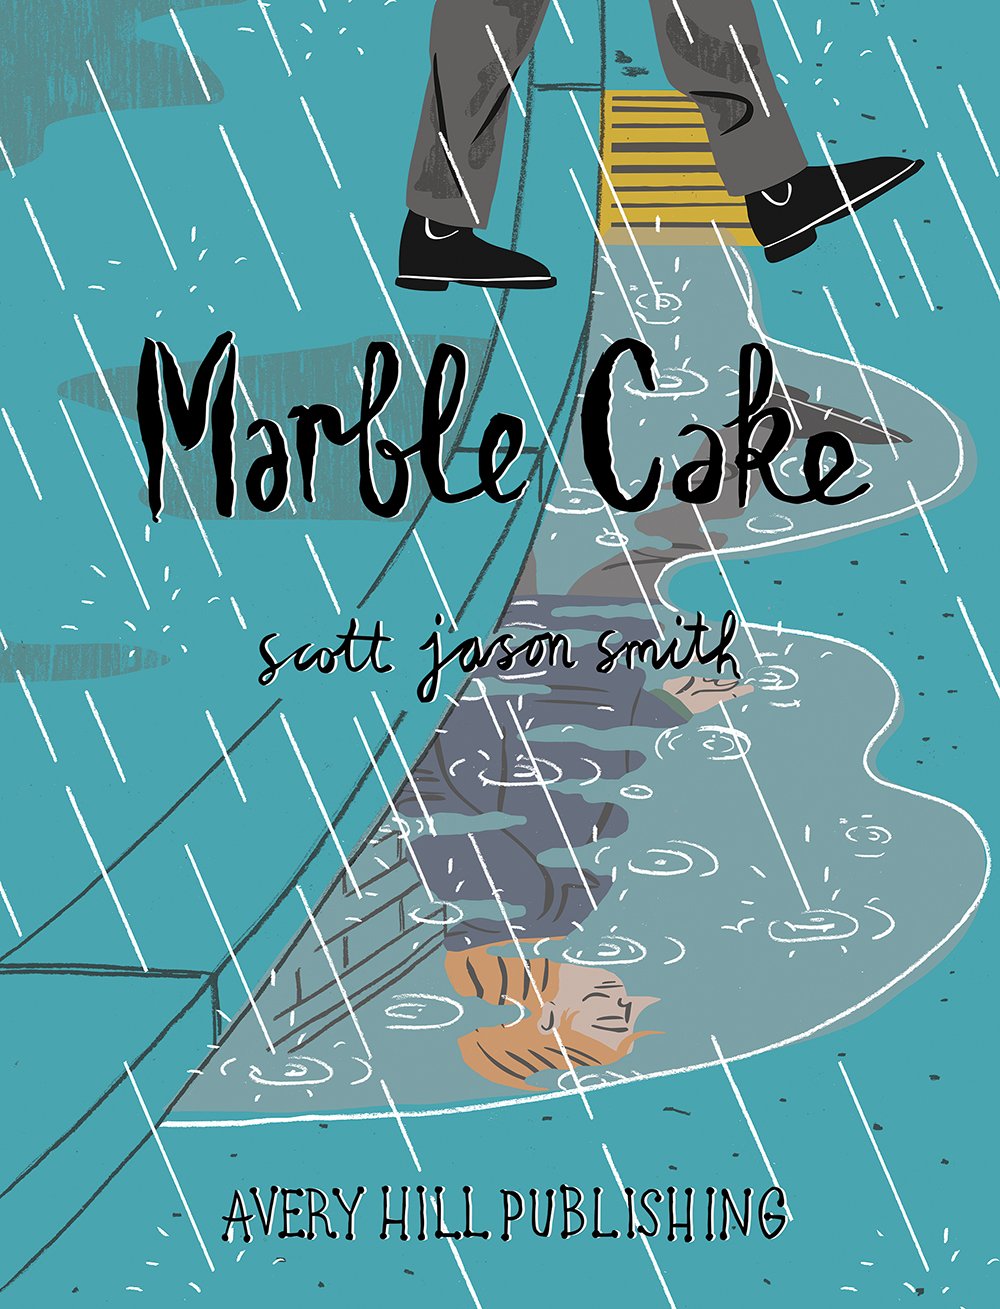 Marble Cake by Scott Jason Smith